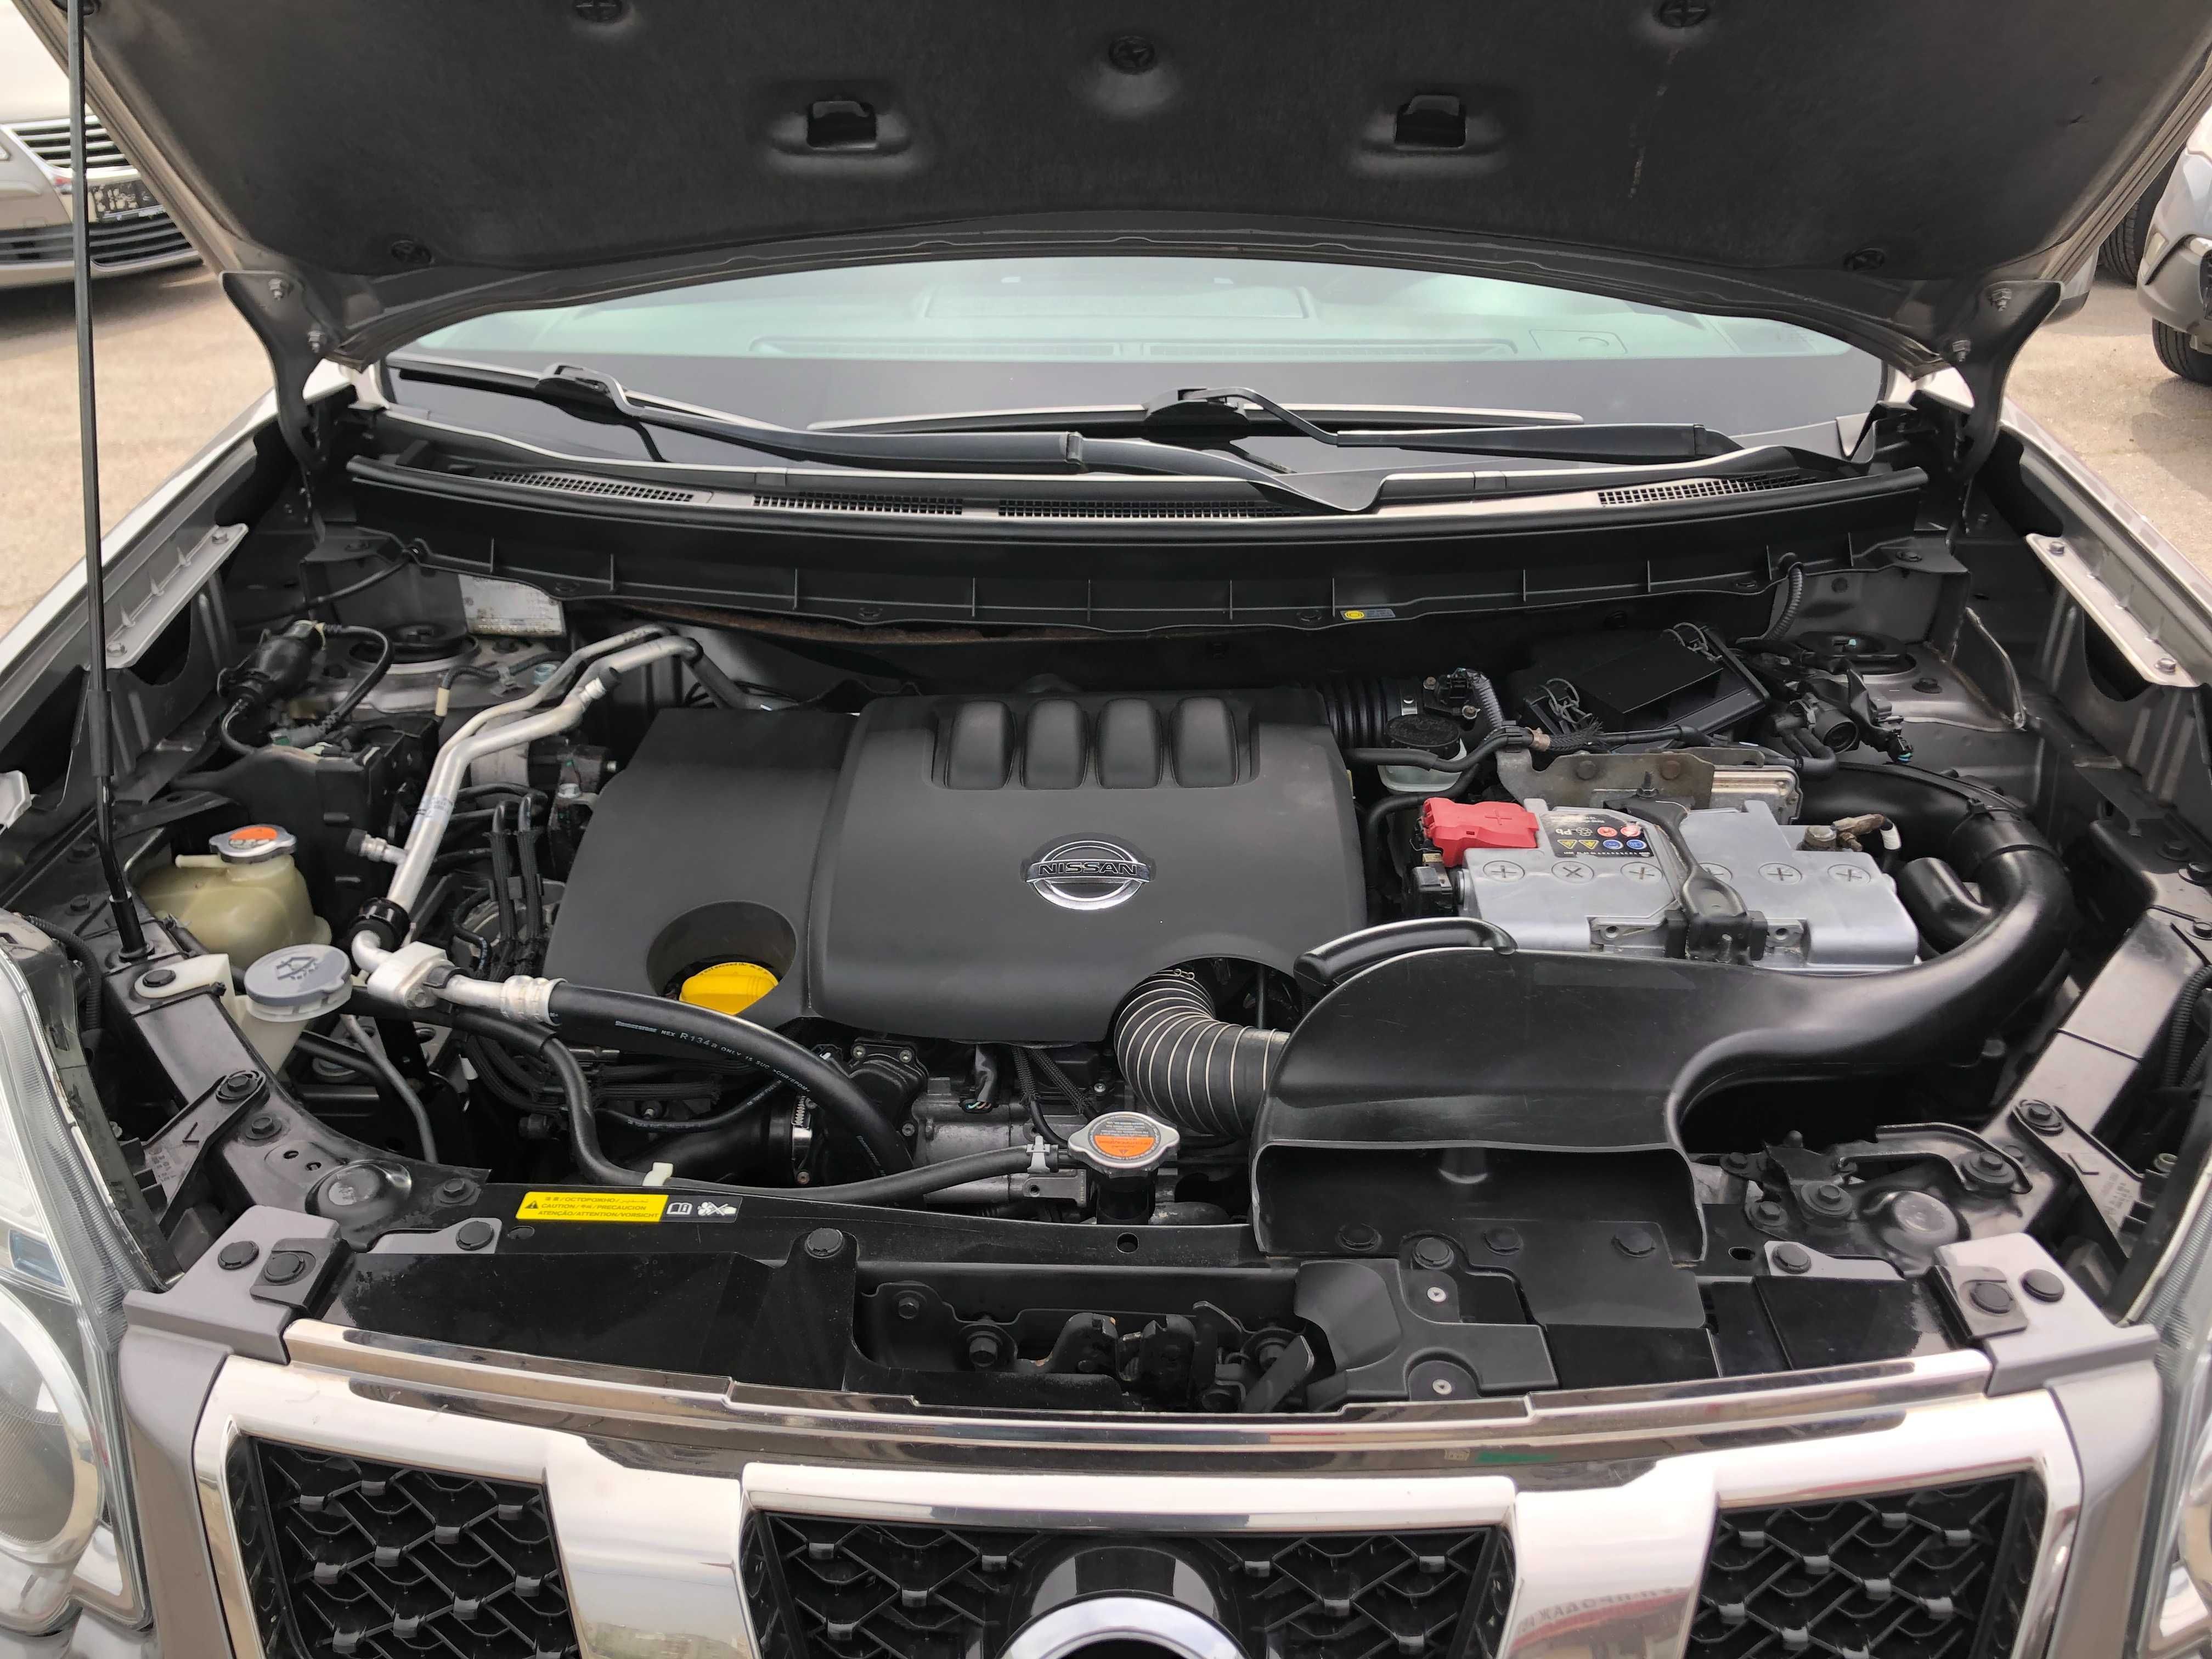 Продам официальный Nissan X-Trail 4x4 2.0 cDi Turbo-Diesel 2014 года.